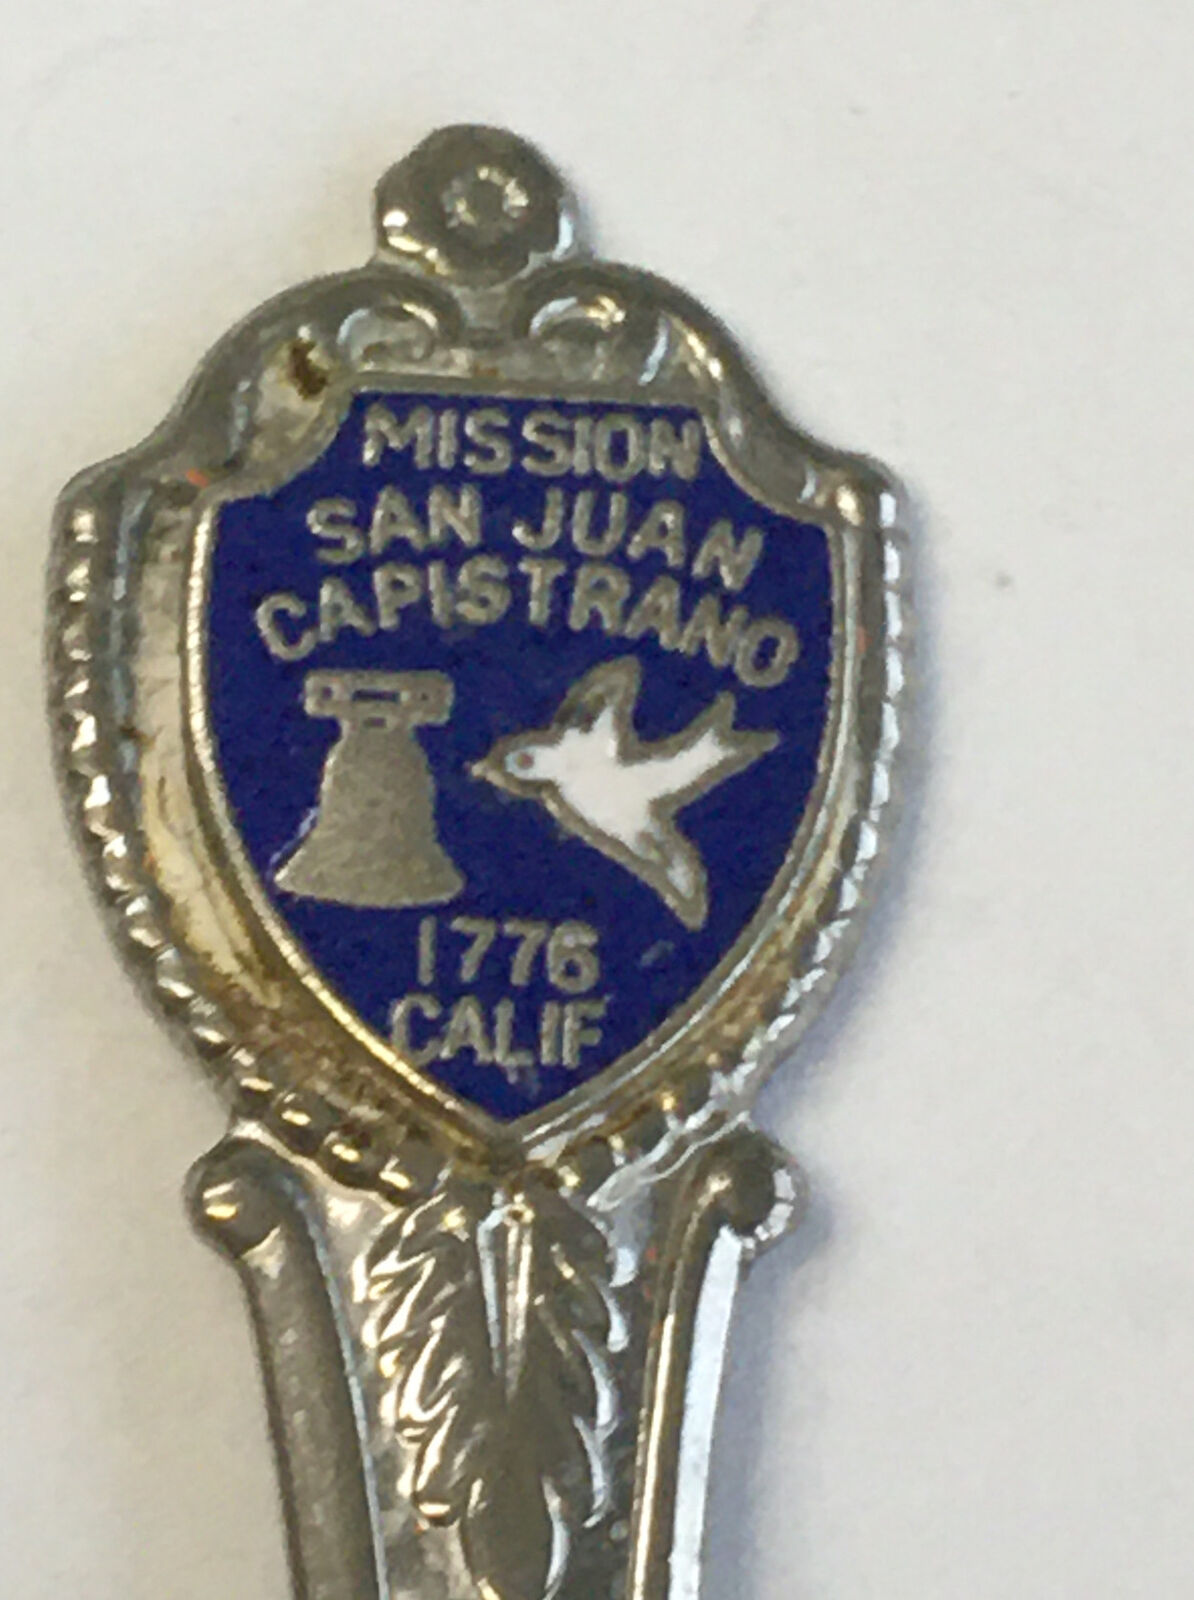 Vtg Souvenir Spoon US Collectible Mission San Juan Capistrano 1776 California